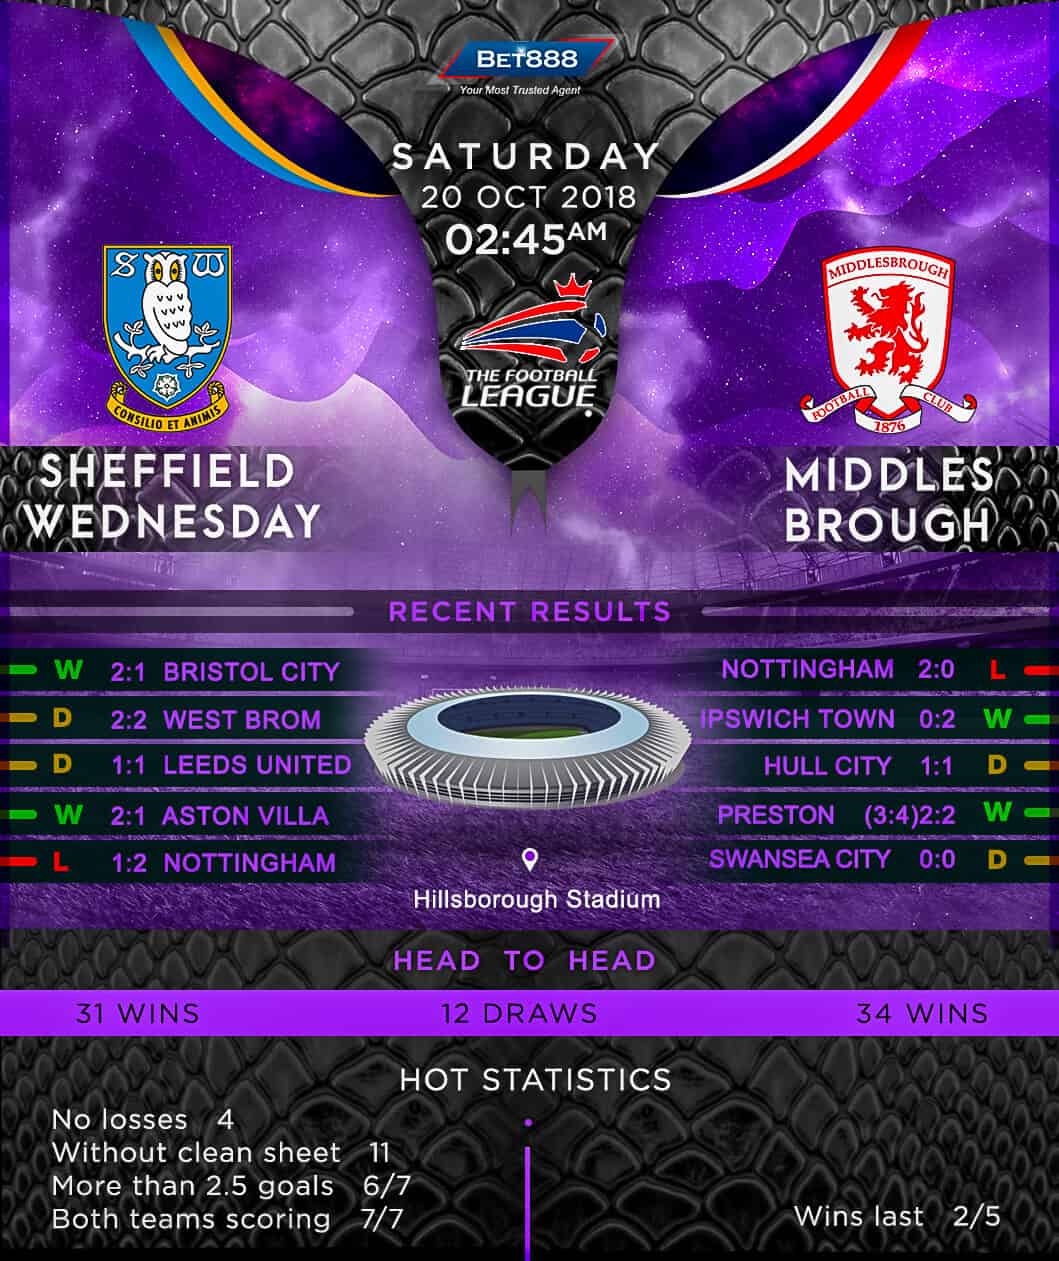 Sheffield Wednesday vs Middlesbrough 20/10/18